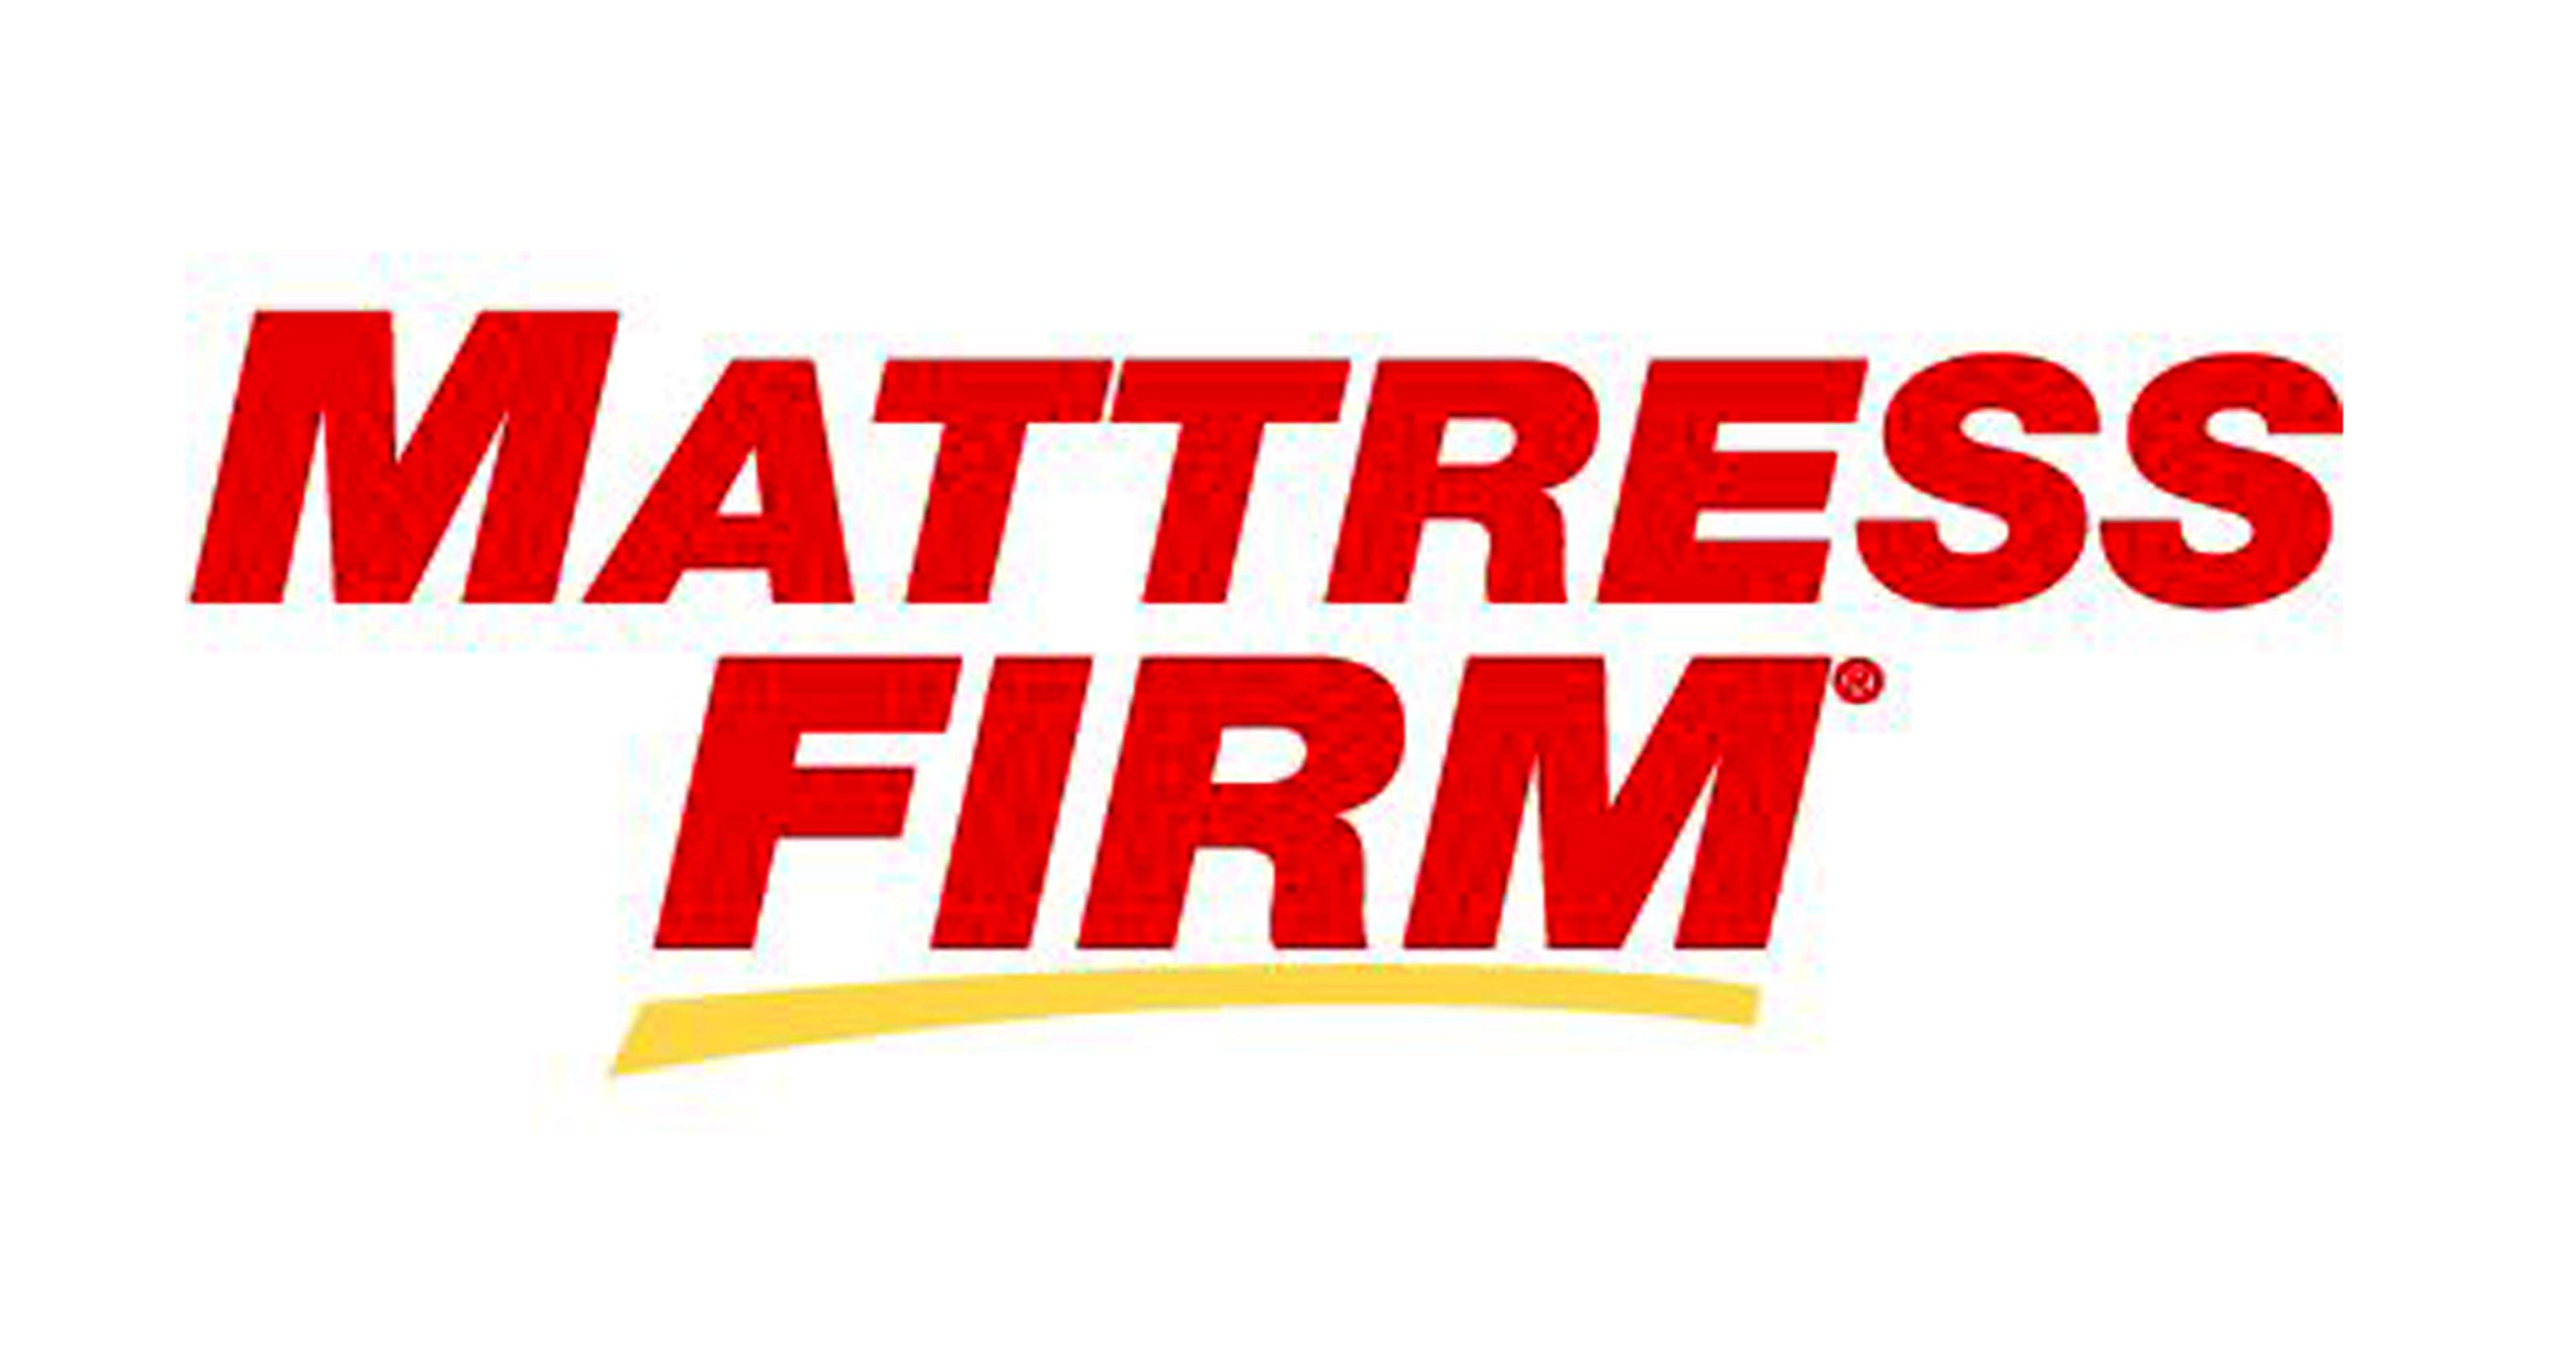 is mattress firm a good company